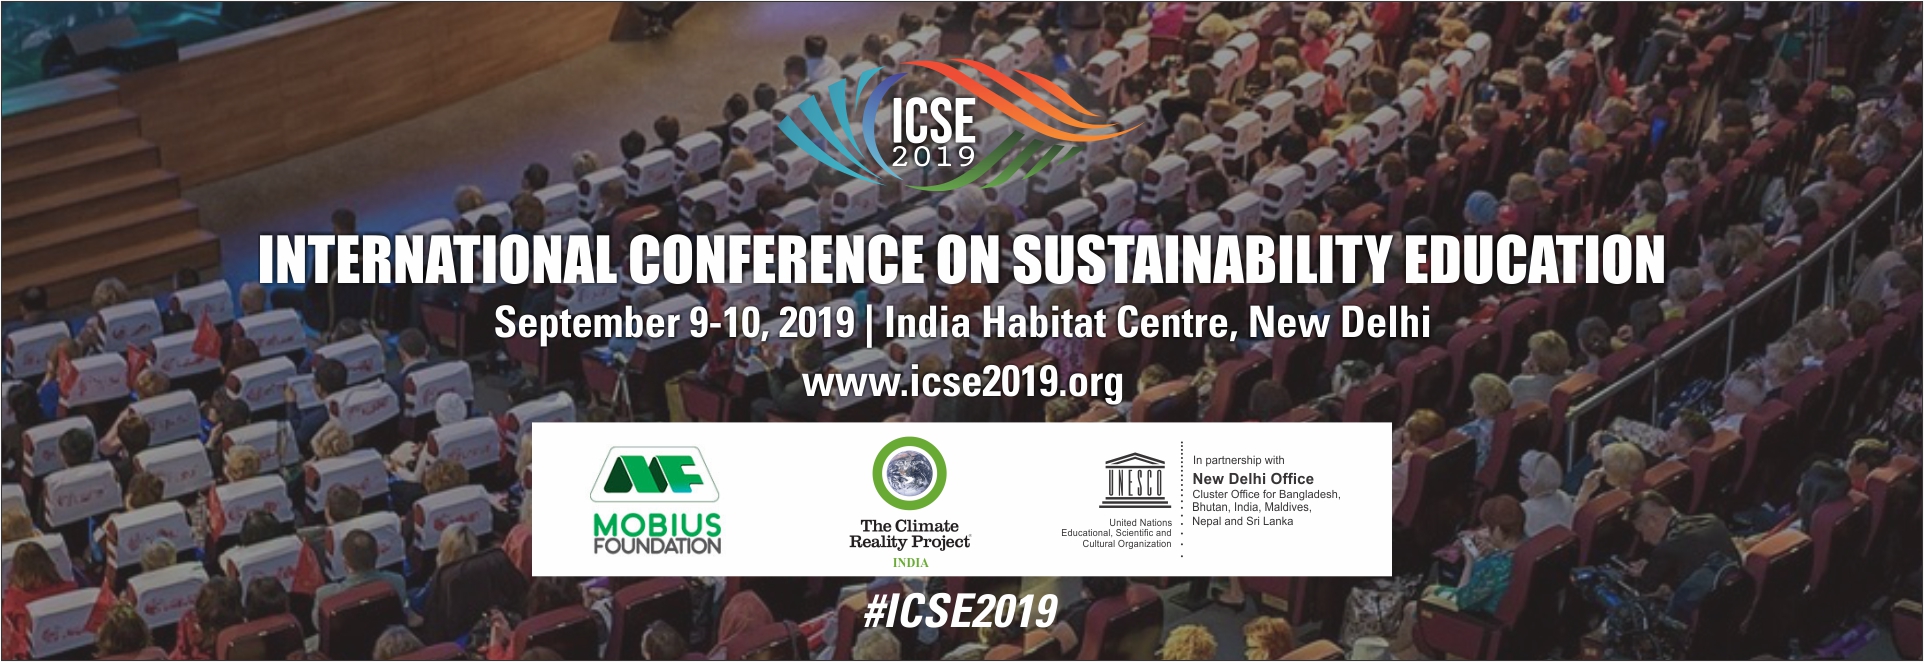 International Conference on Sustainability Education 2019, Central Delhi, Delhi, India